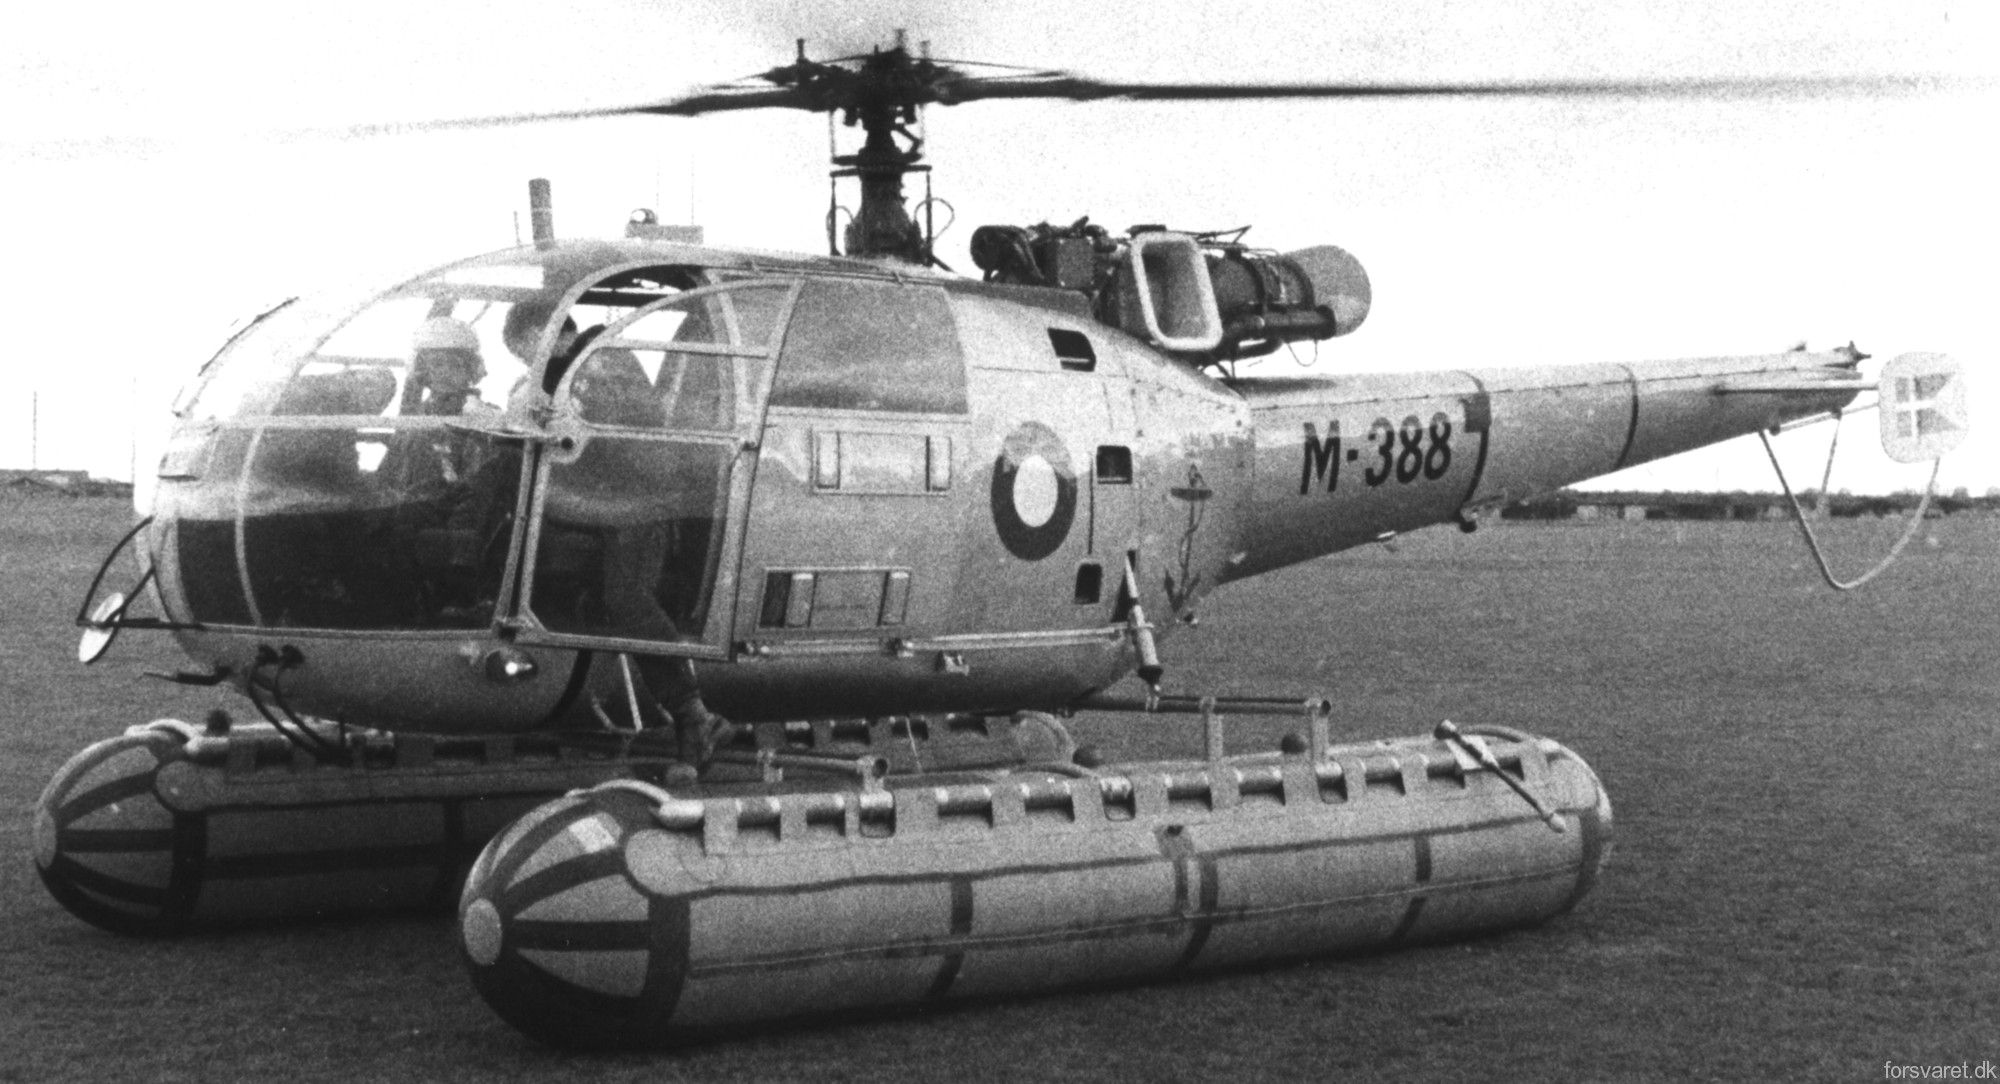 sa 316b alouette iii helicopter royal danish navy søværnet kongelige danske marine sud aviation m-388 10